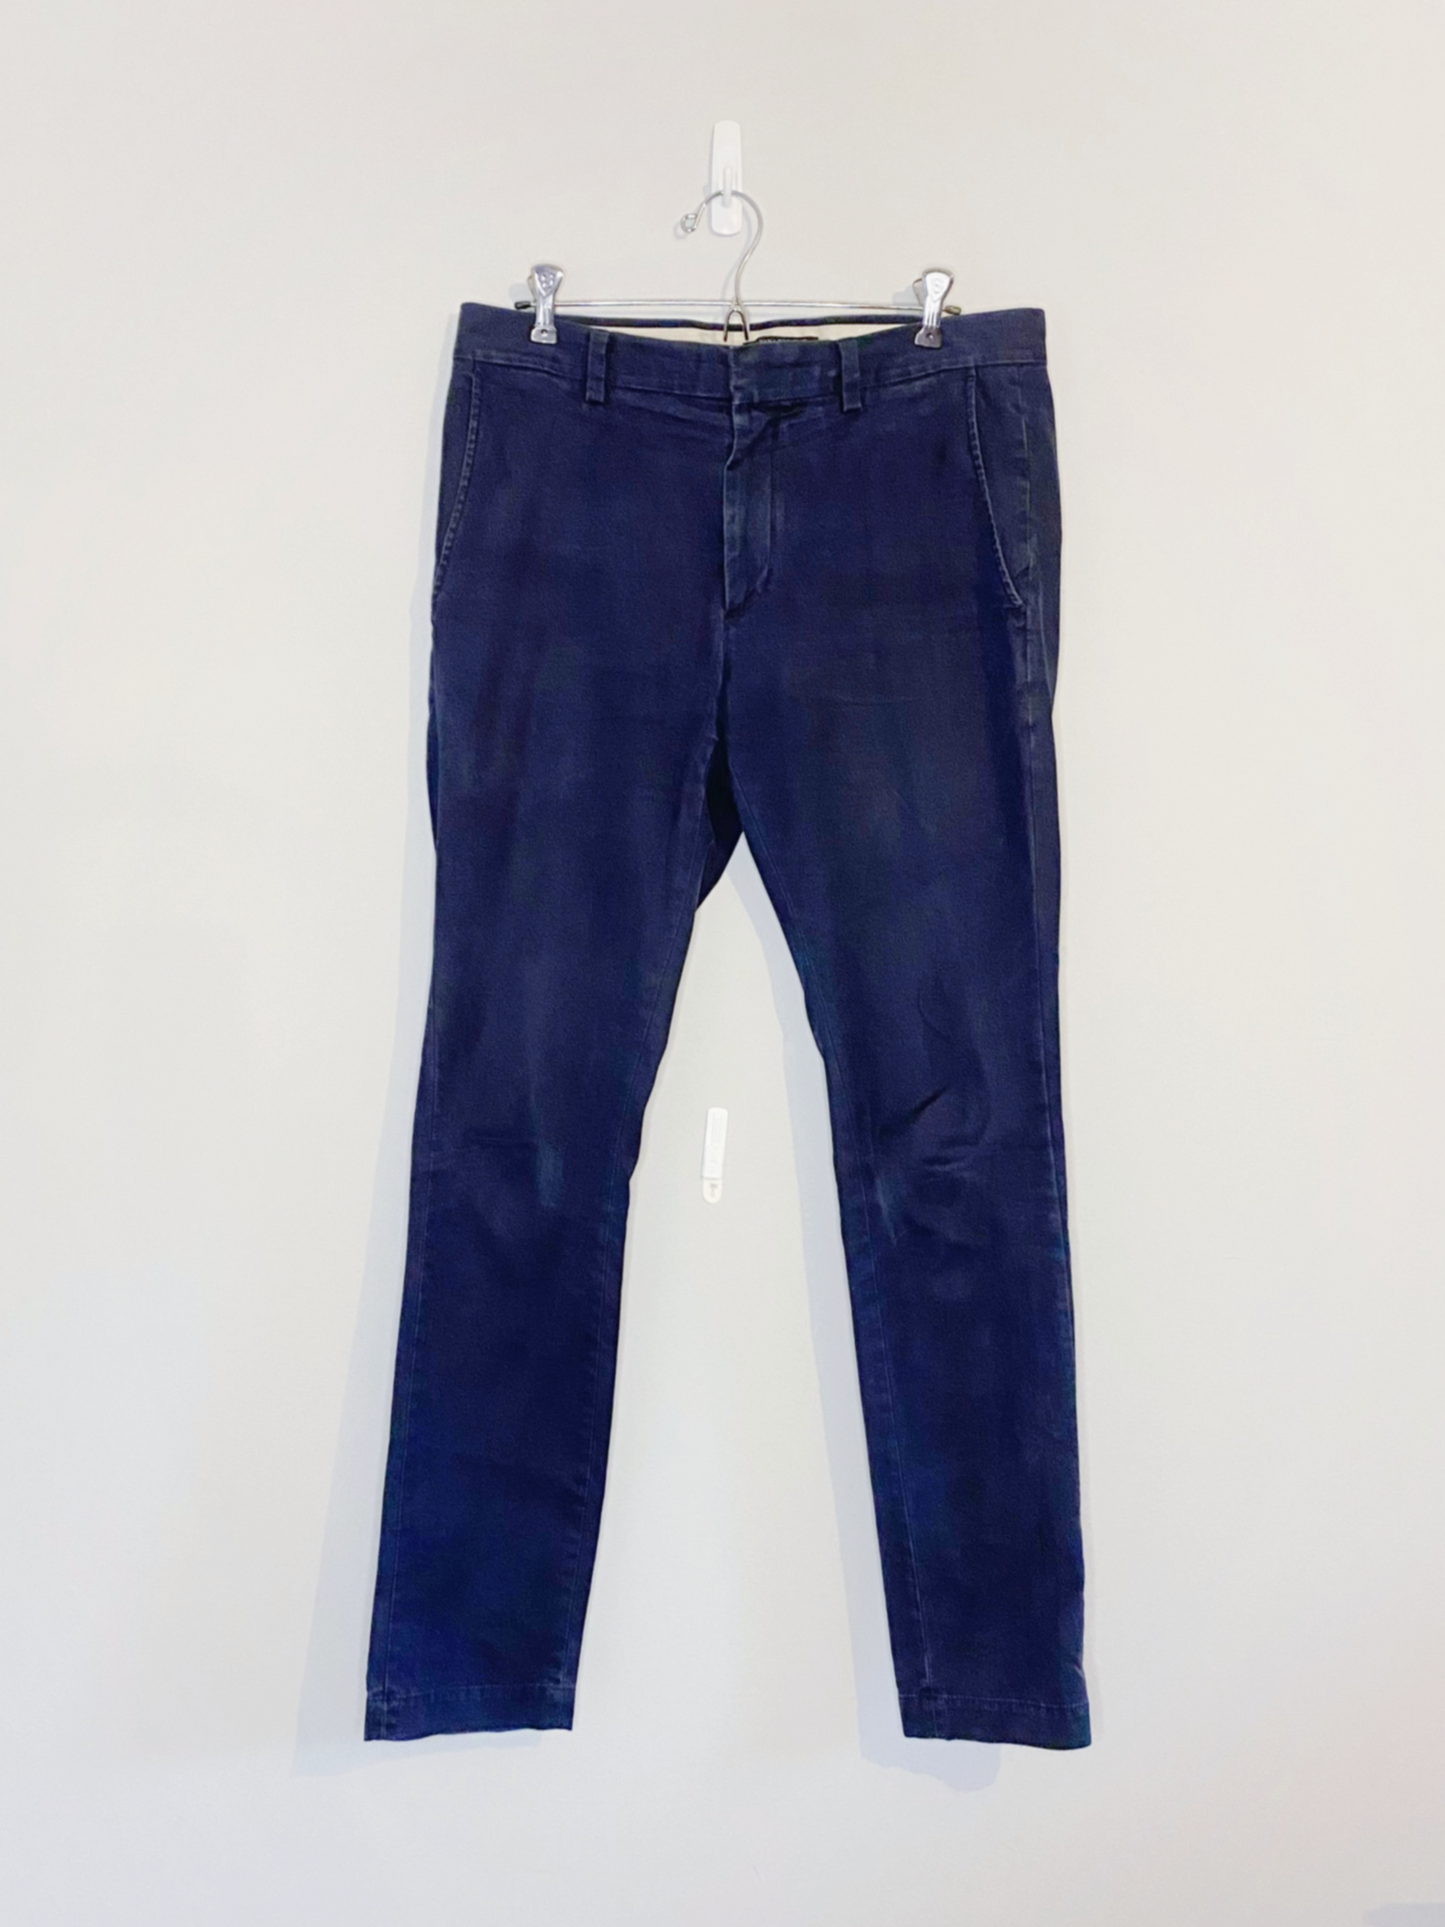 Pantalon Bleu Marine (Taille 31x32)